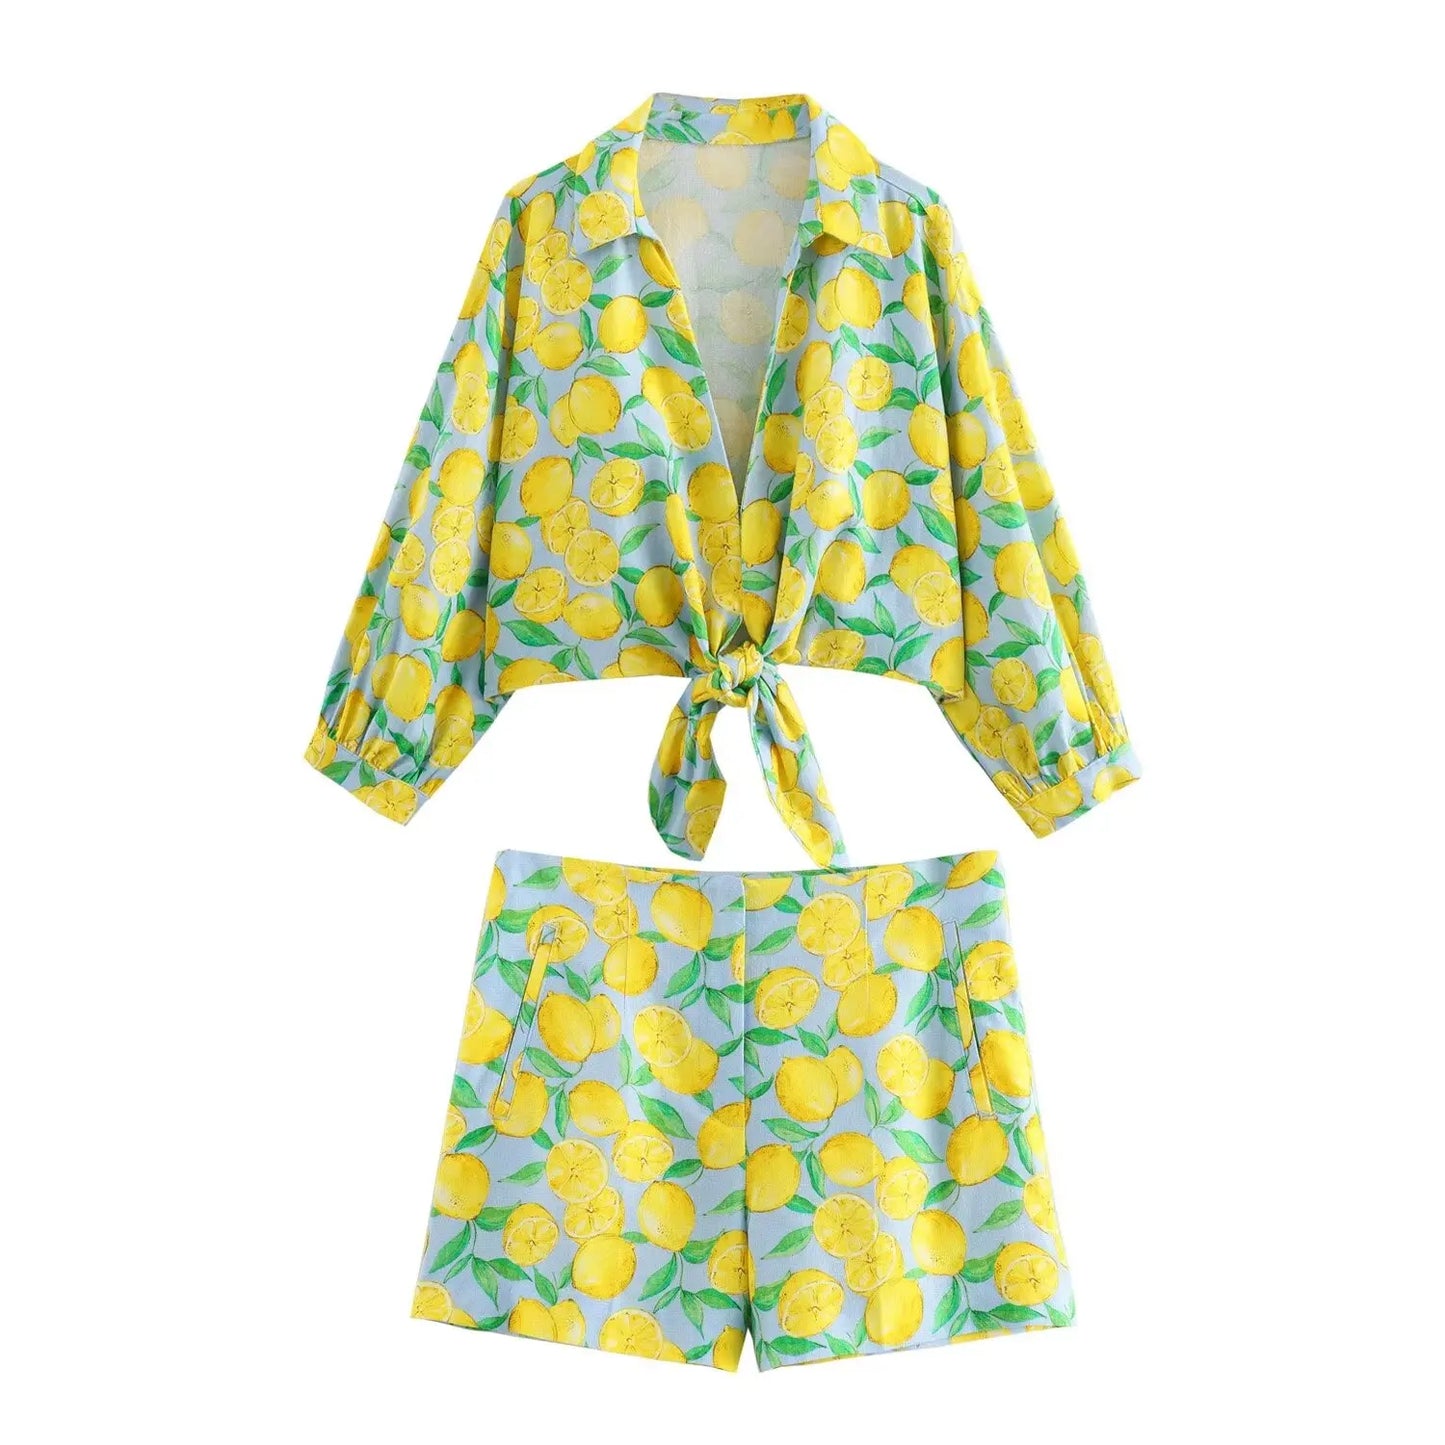 Shorts Sets- Women Zesty Lemon Crop Top & Shorts - Two-Piece Set for Summer Days- yellow print suit- Chuzko Women Clothing